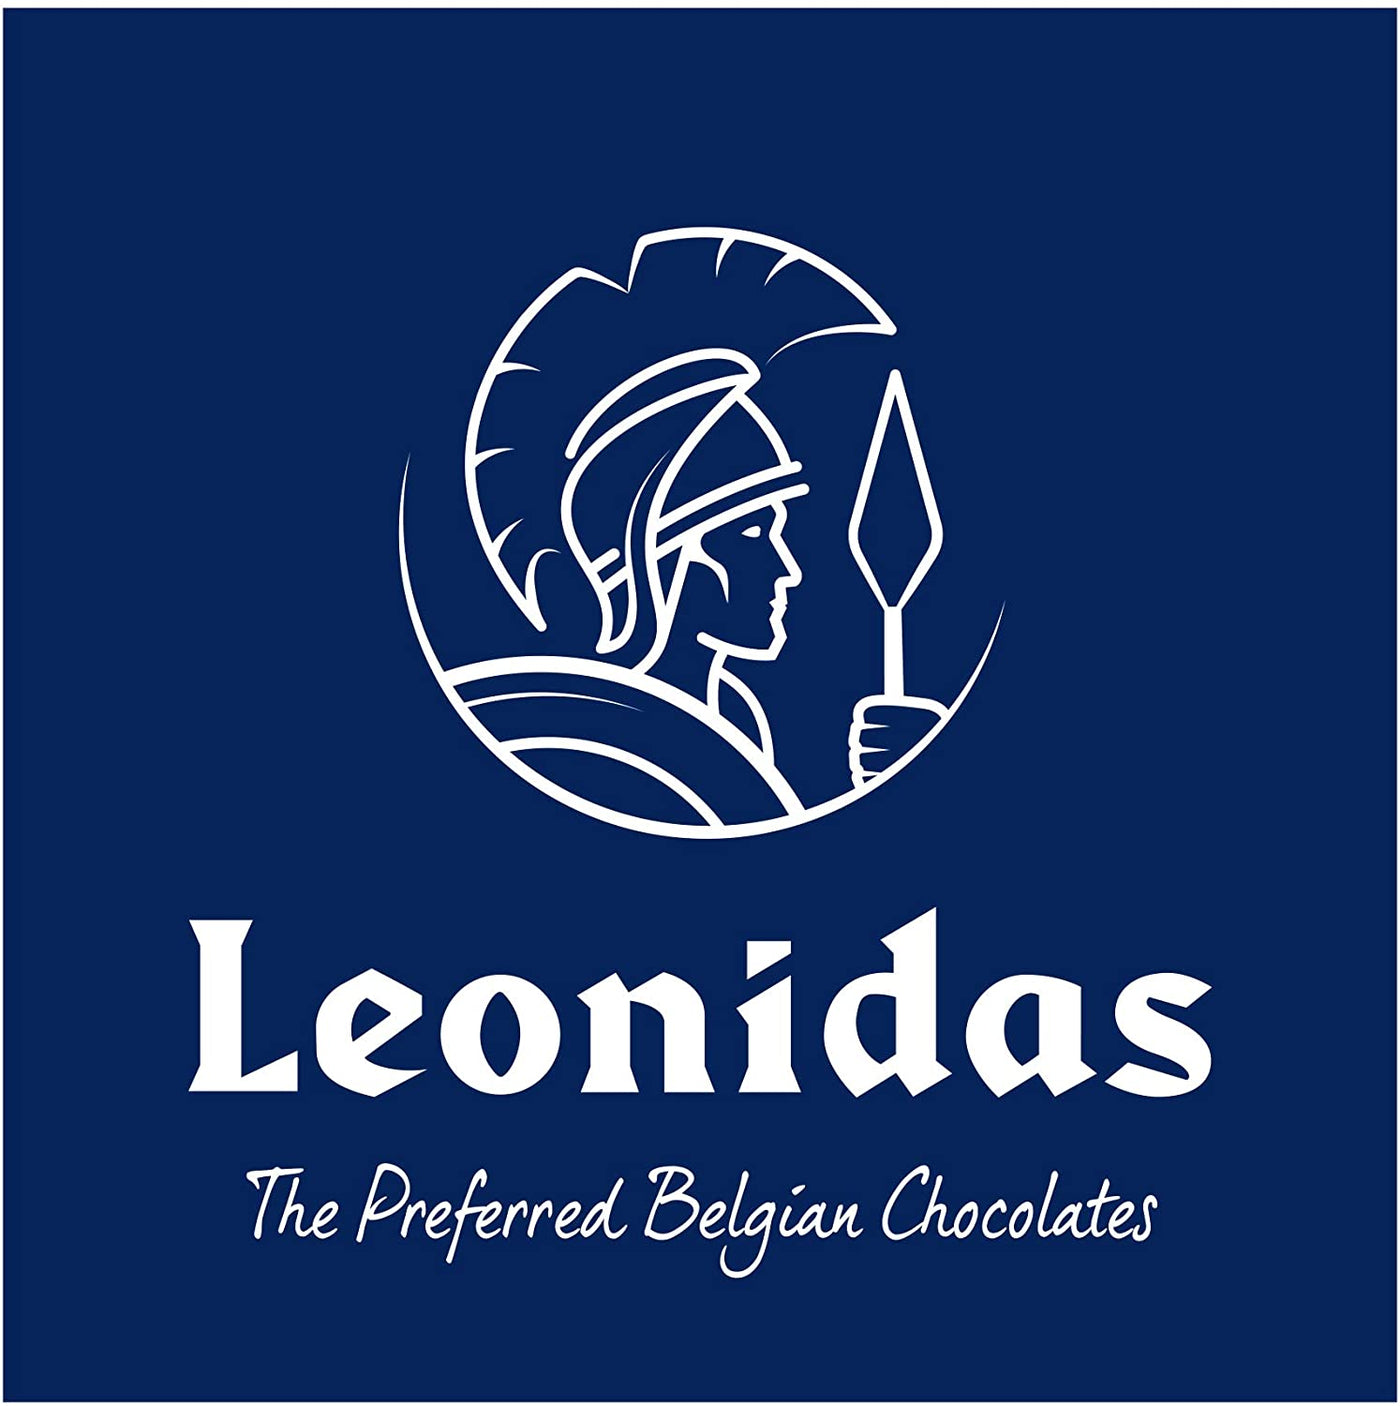 Leonidas Assorted Selection Traditional Tin House Chocolate Box, 550g. freeshipping - Leonidas Kensington